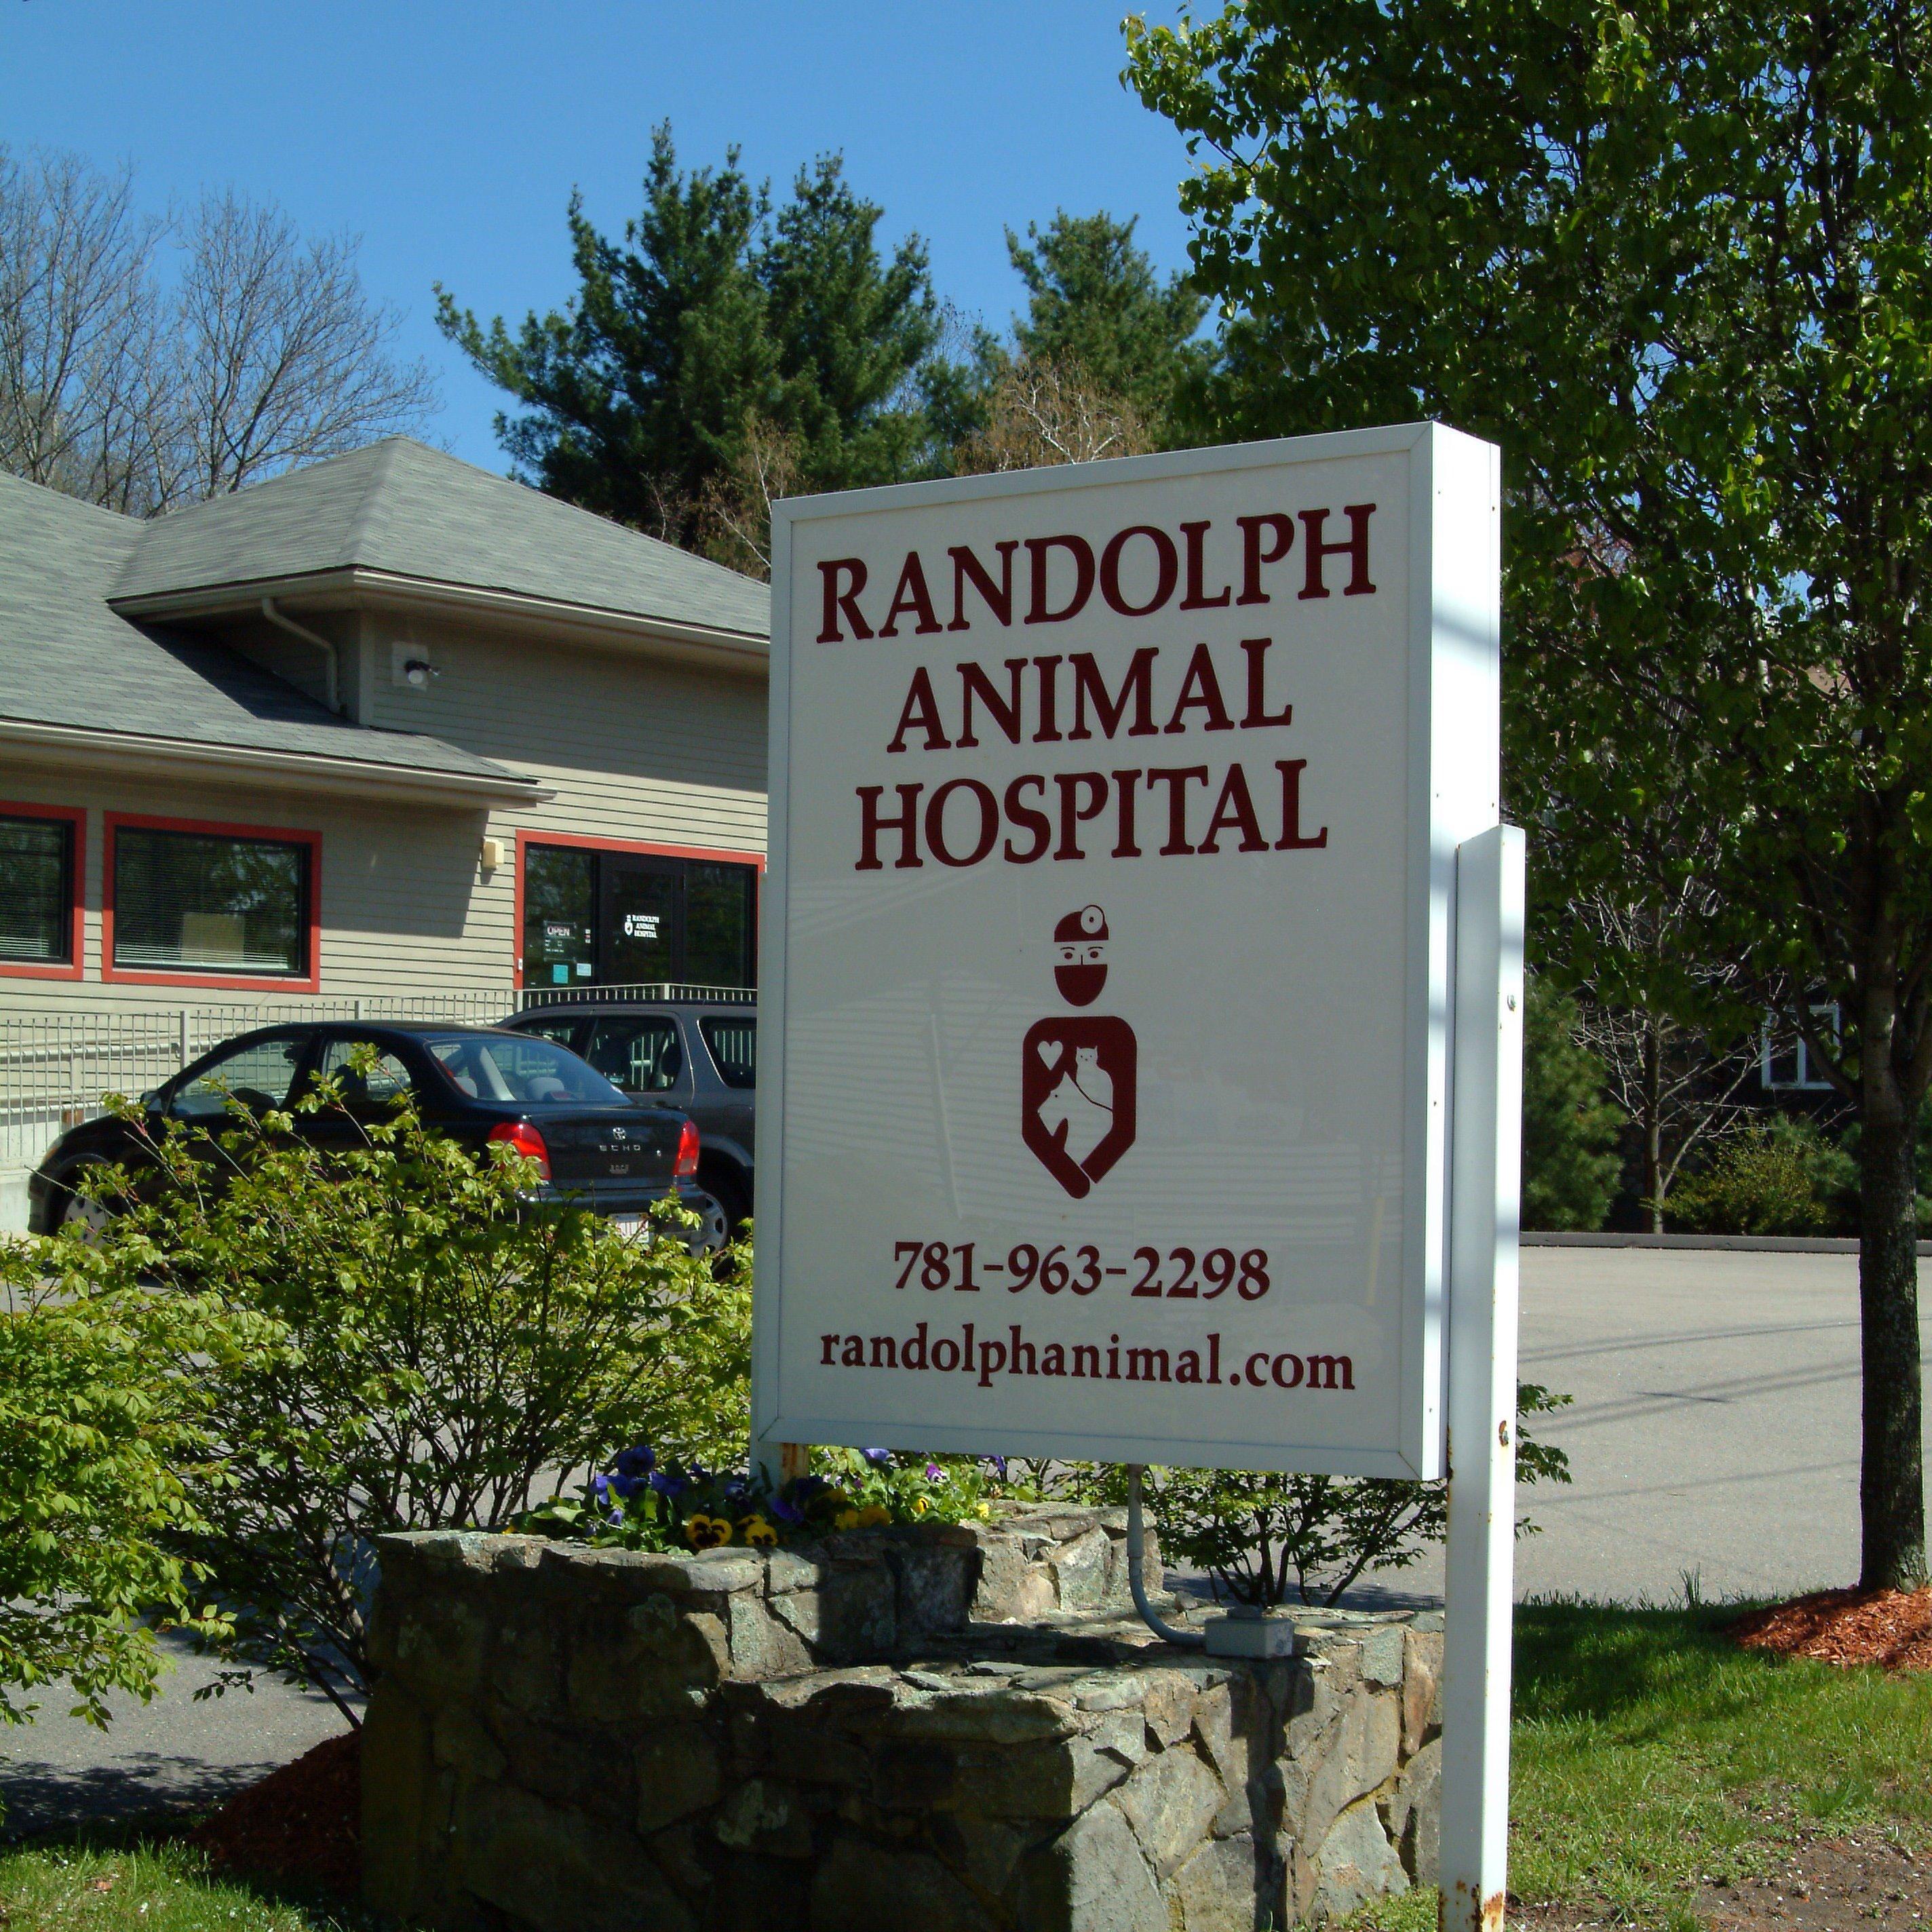 Randolph Animal Hospital Coupons near me in Randolph ...